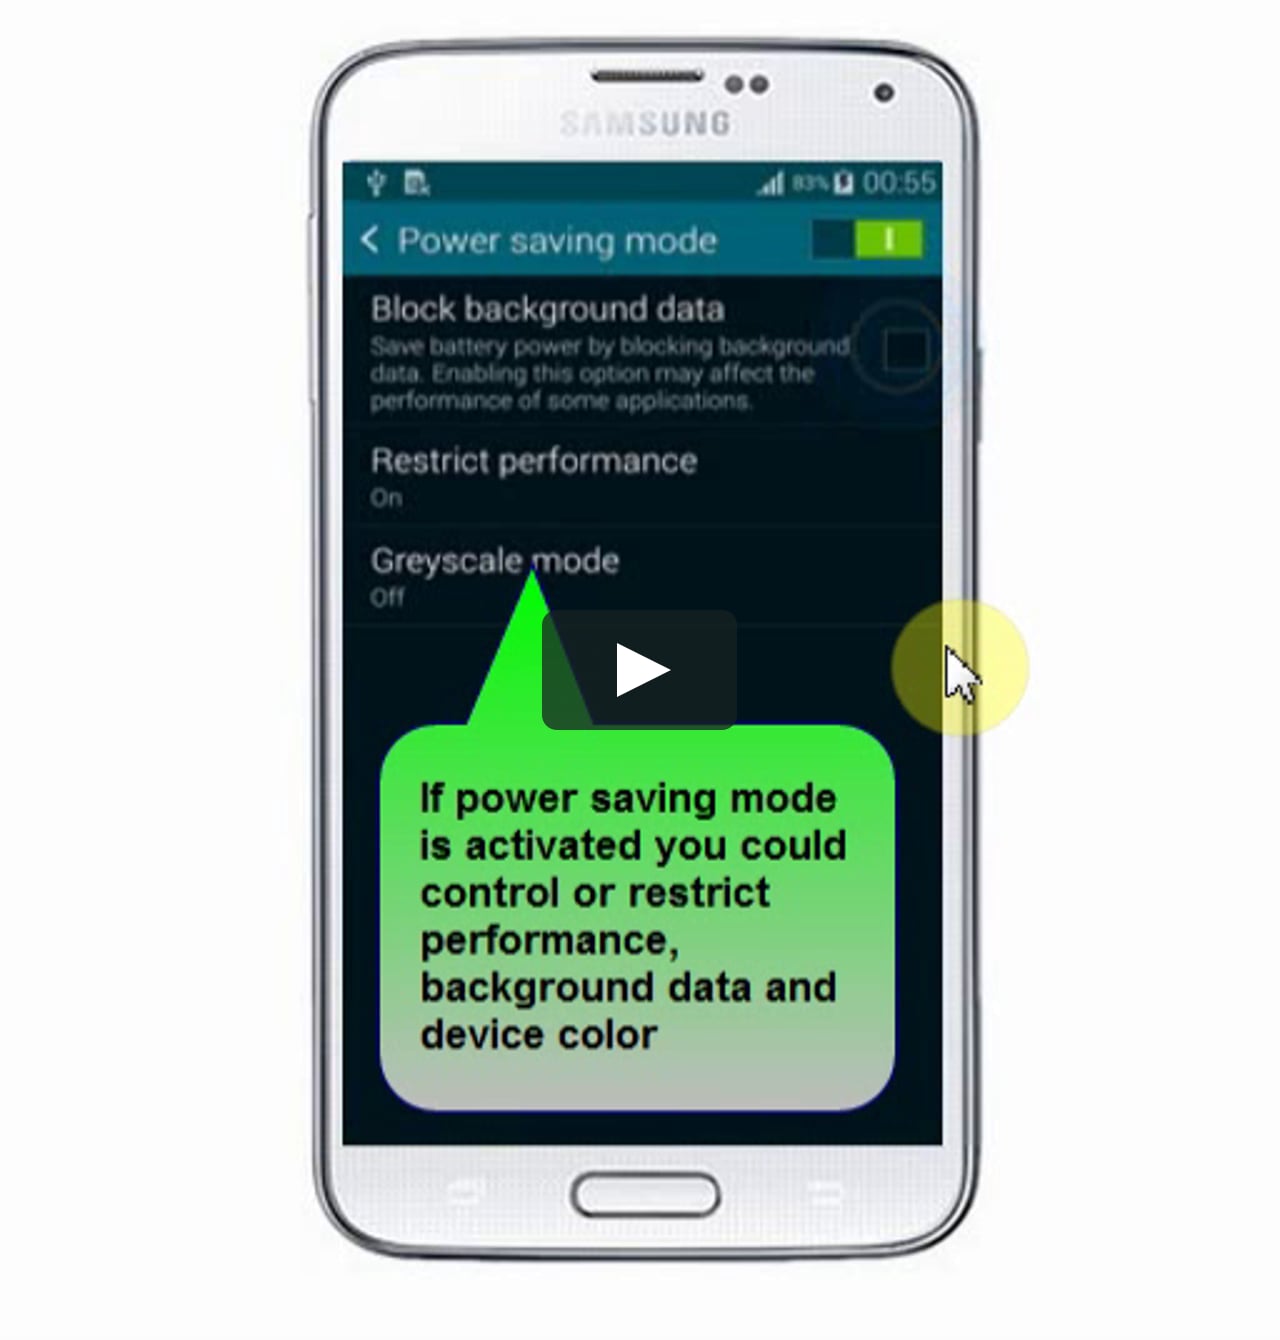 How to set Power Saving mode in Samsung Galaxy S5 Phone on Vimeo